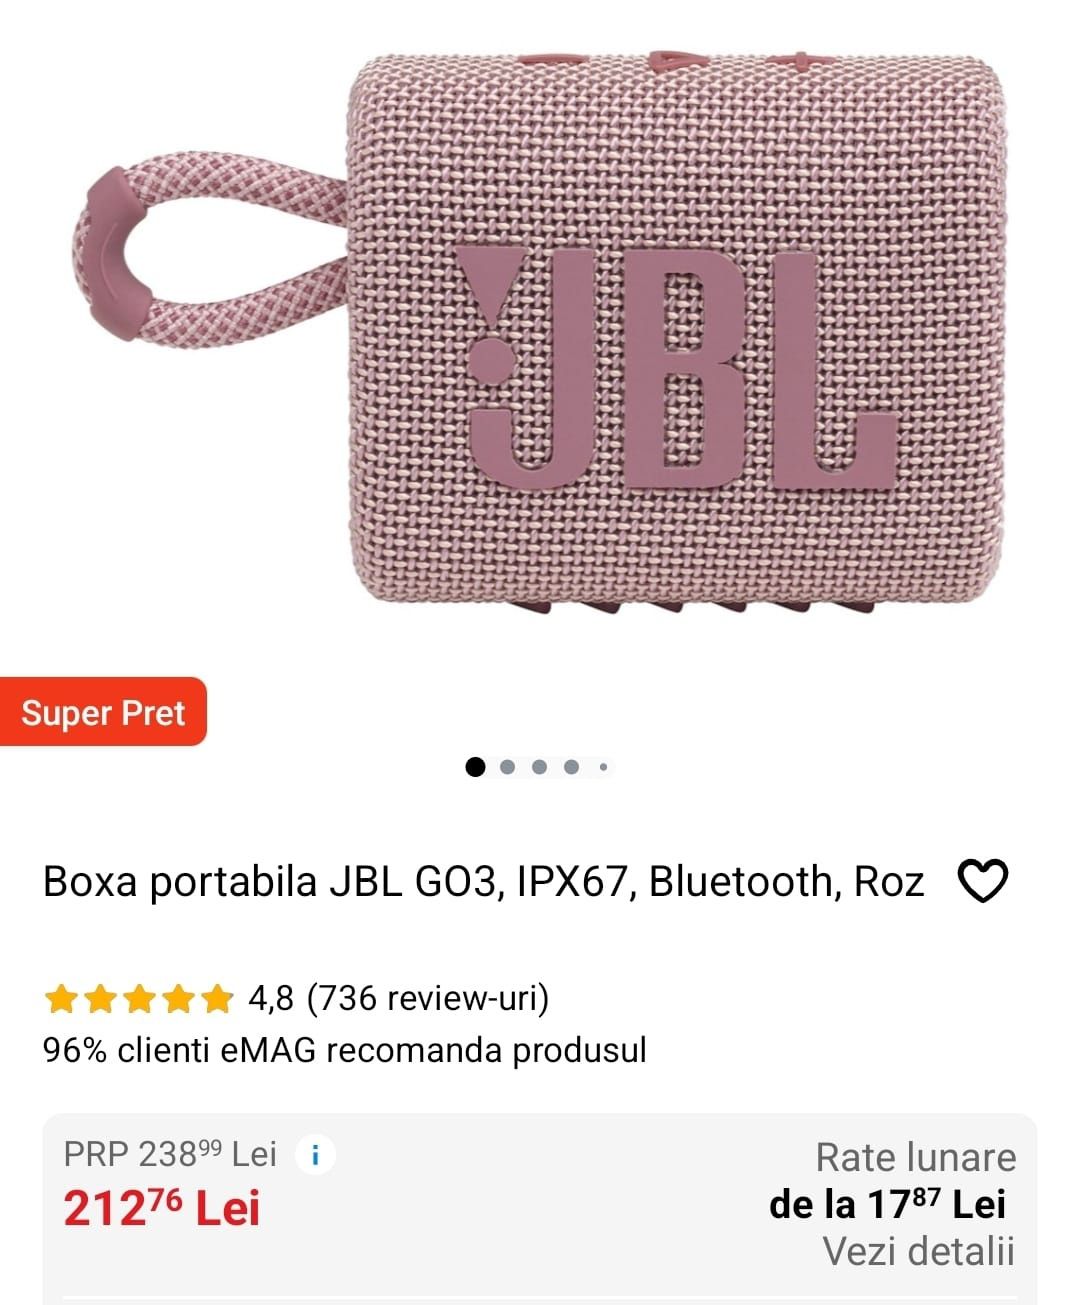 Boxa portabila JBL GO3, IPX67, Bluetooth, Roz